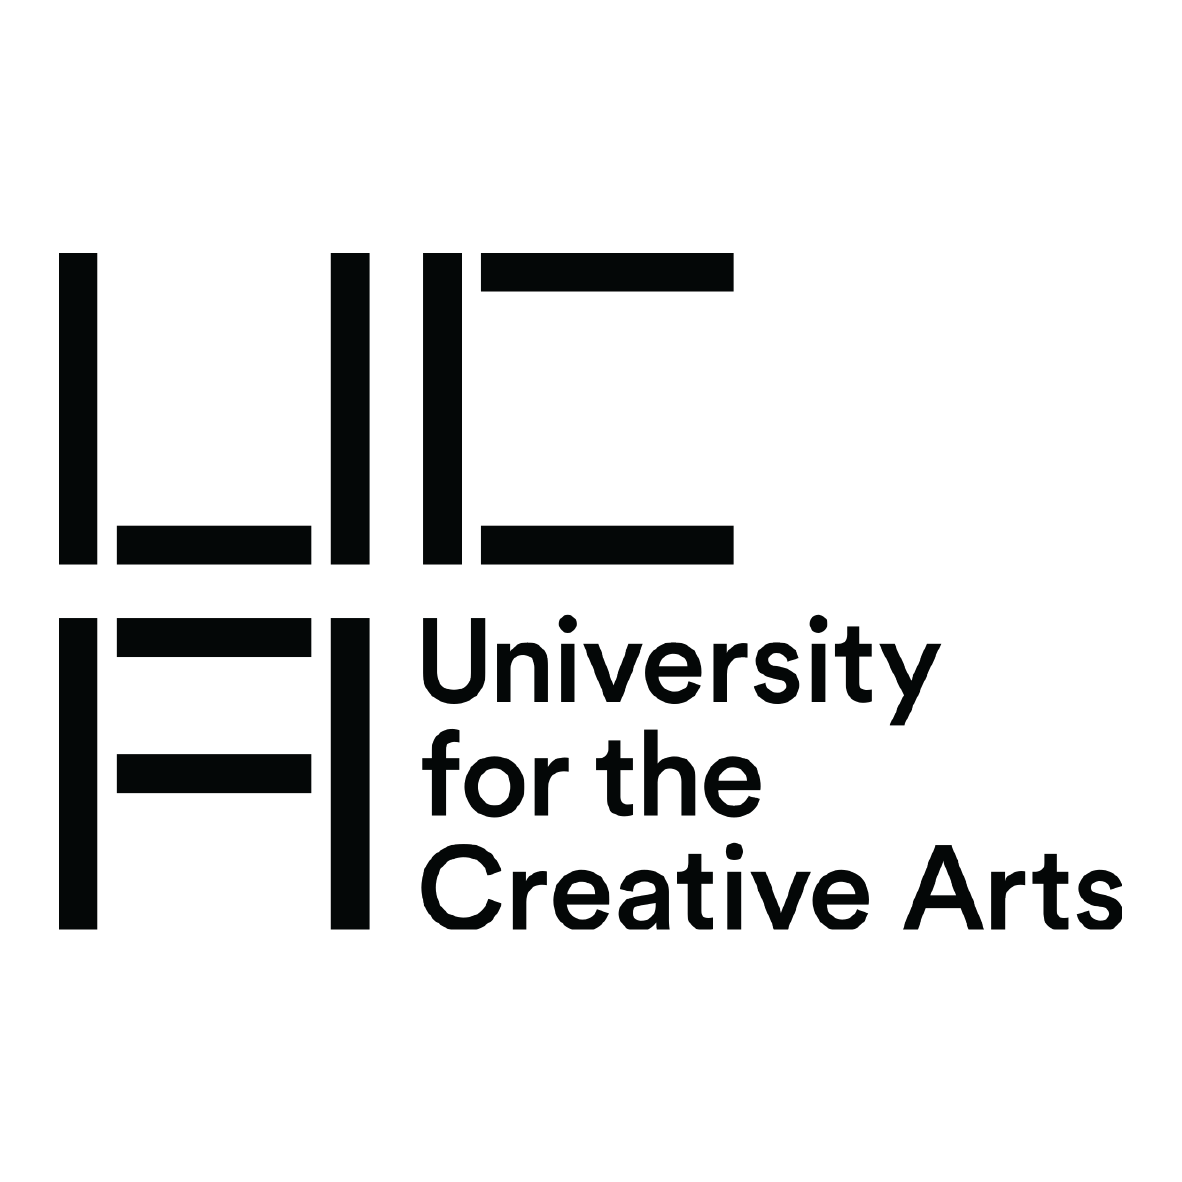 University For the Creative Arts